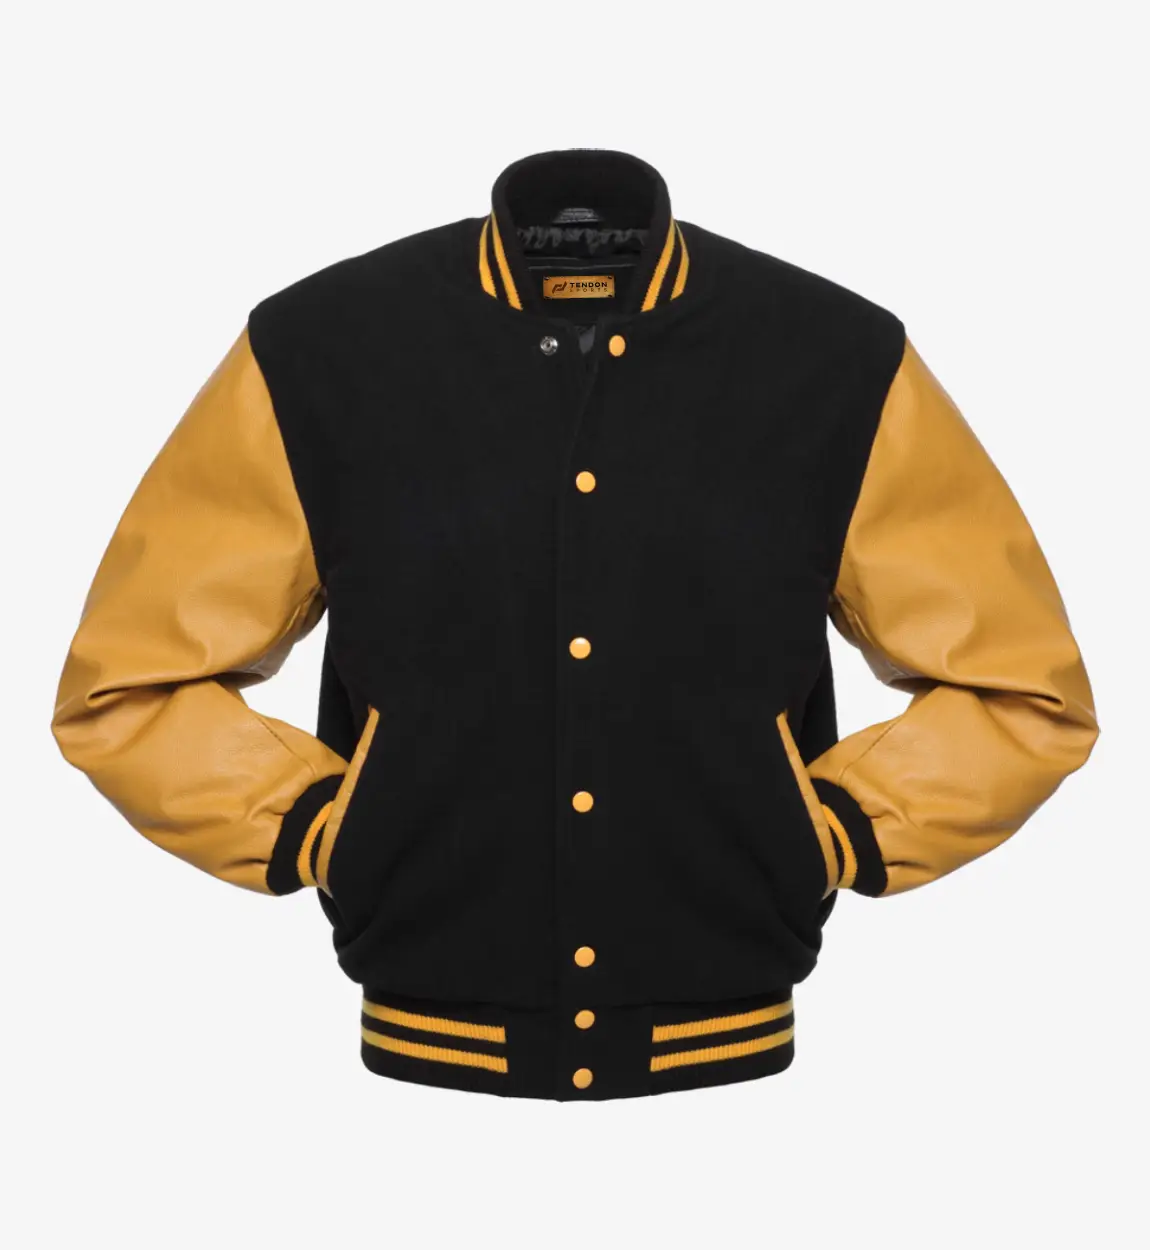 Black and Golden Varisty jacket Tendon Sports bespoke tailoring